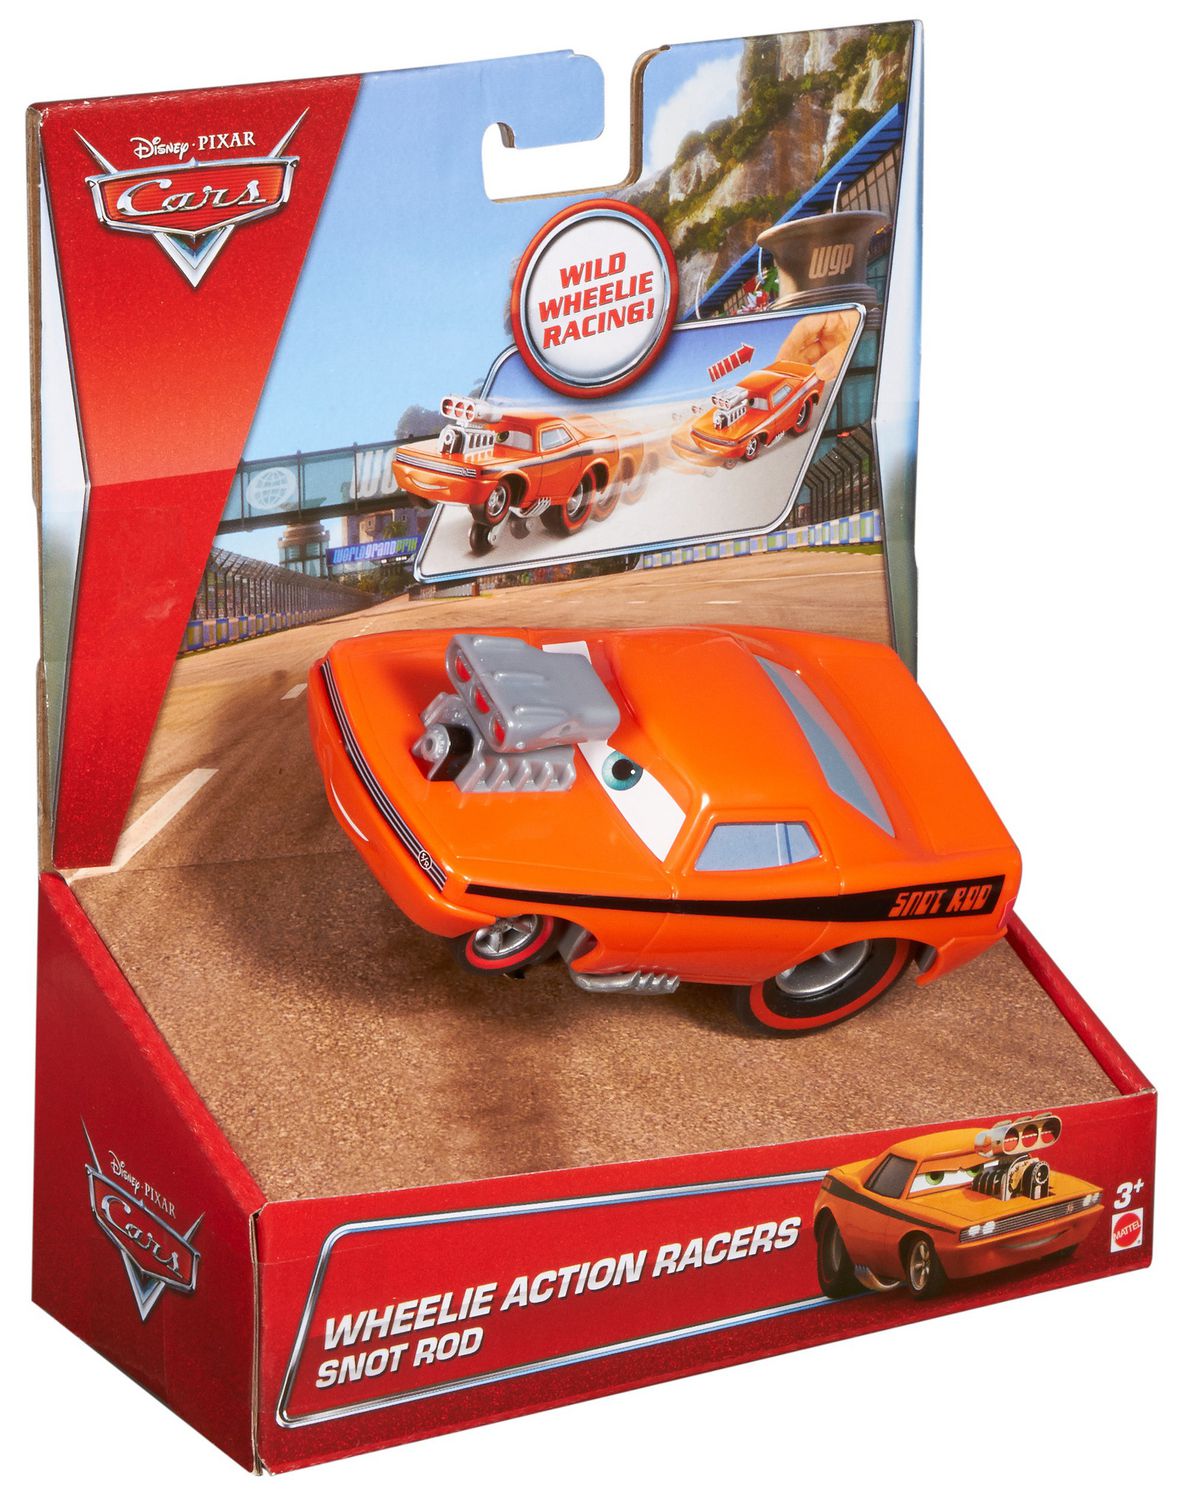 Disney/Pixar Cars Wheelie Action Racers - Snot Rod 